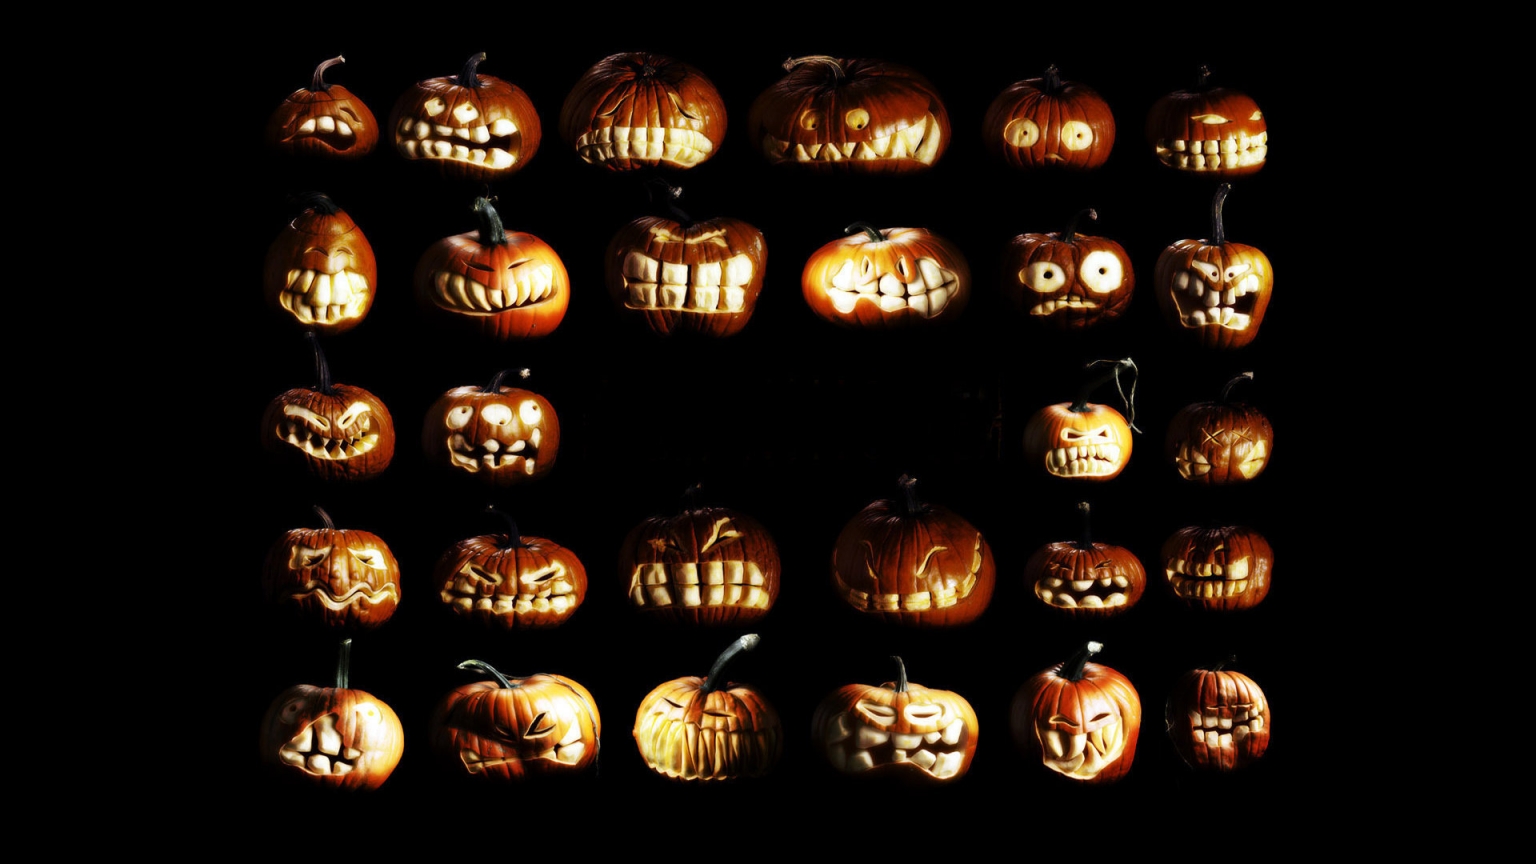 Pumpkin figures for Halloween for 1536 x 864 HDTV resolution